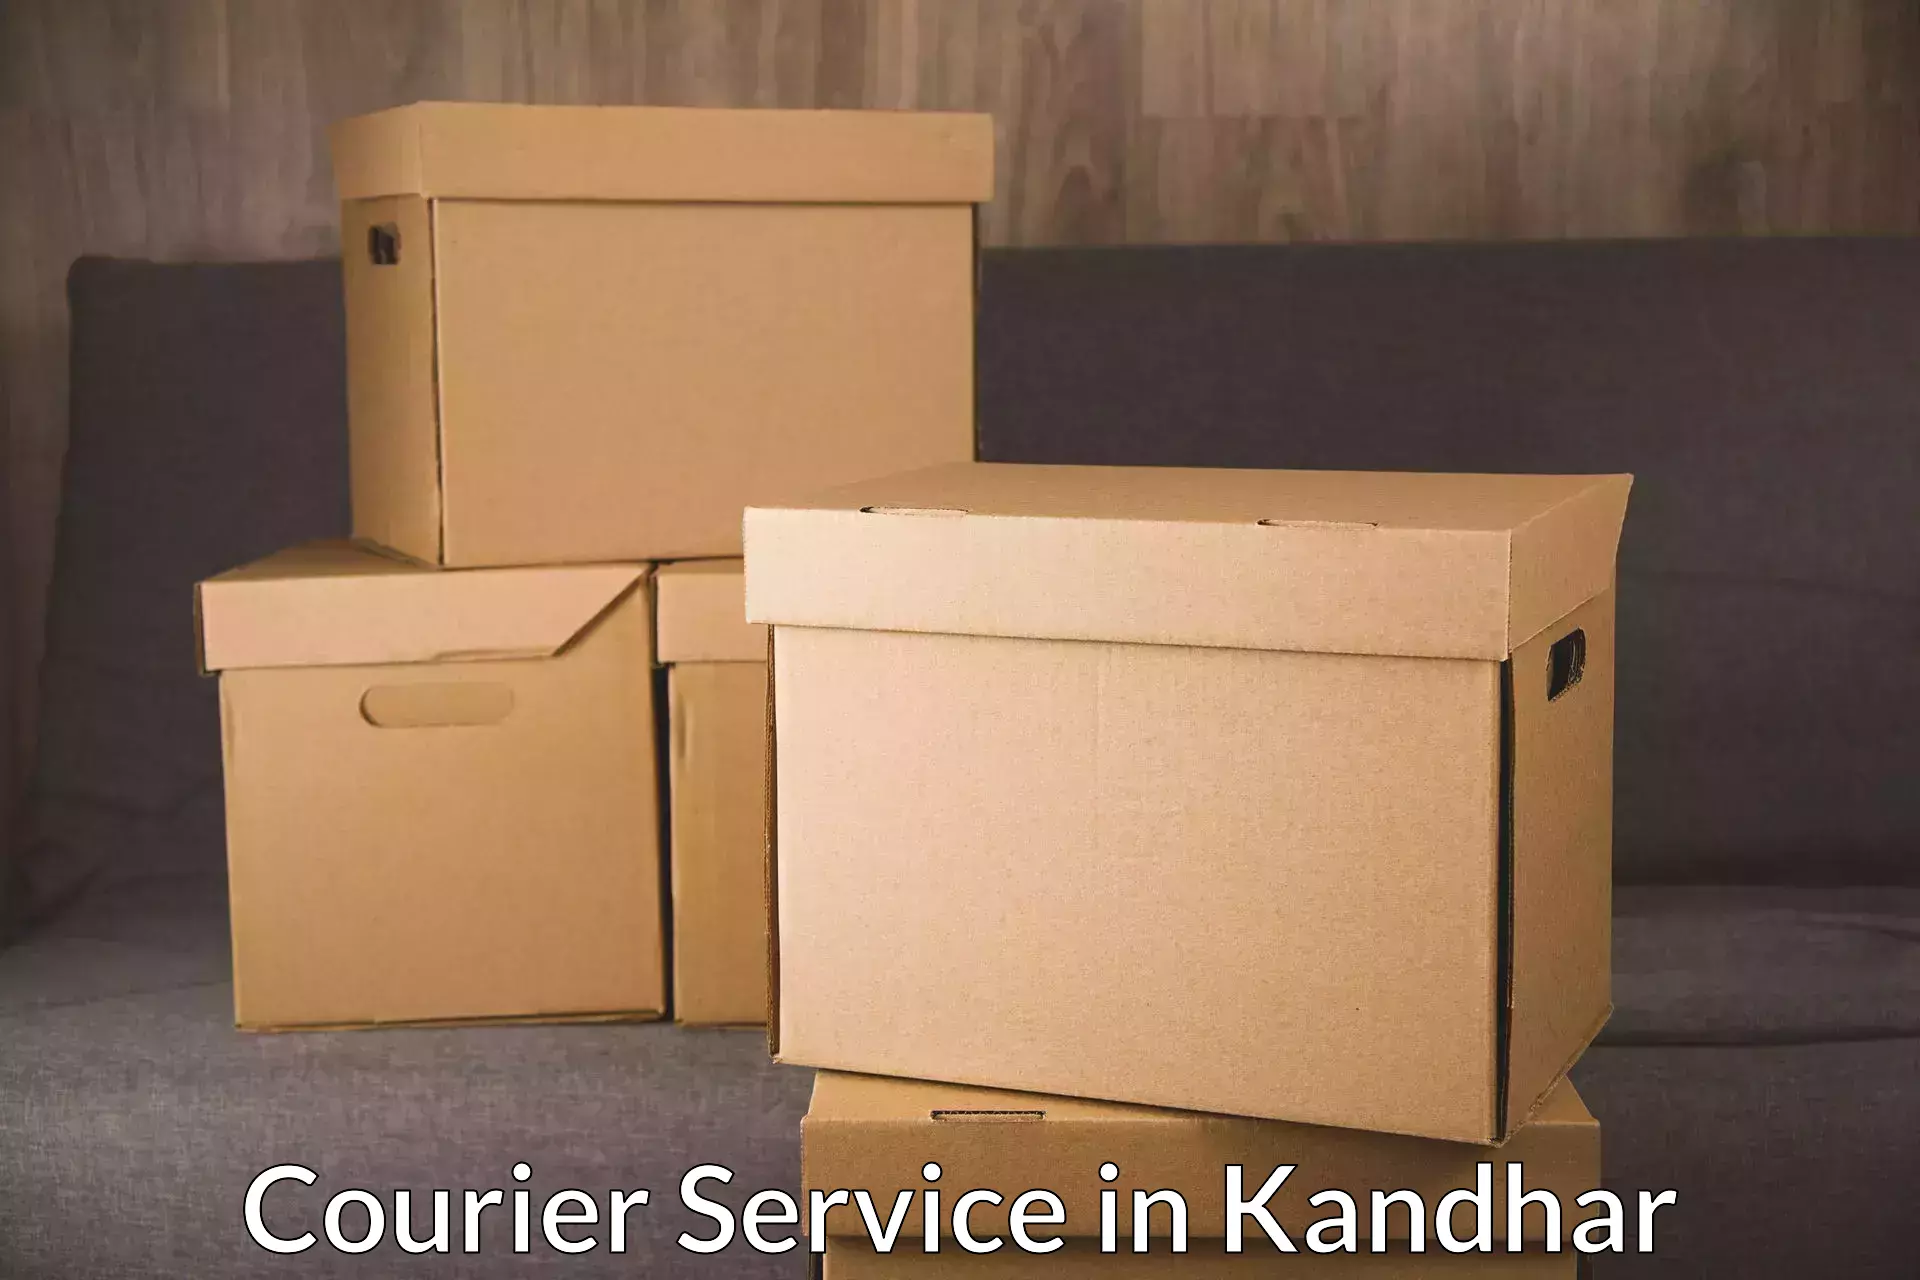 Medical delivery services in Kandhar